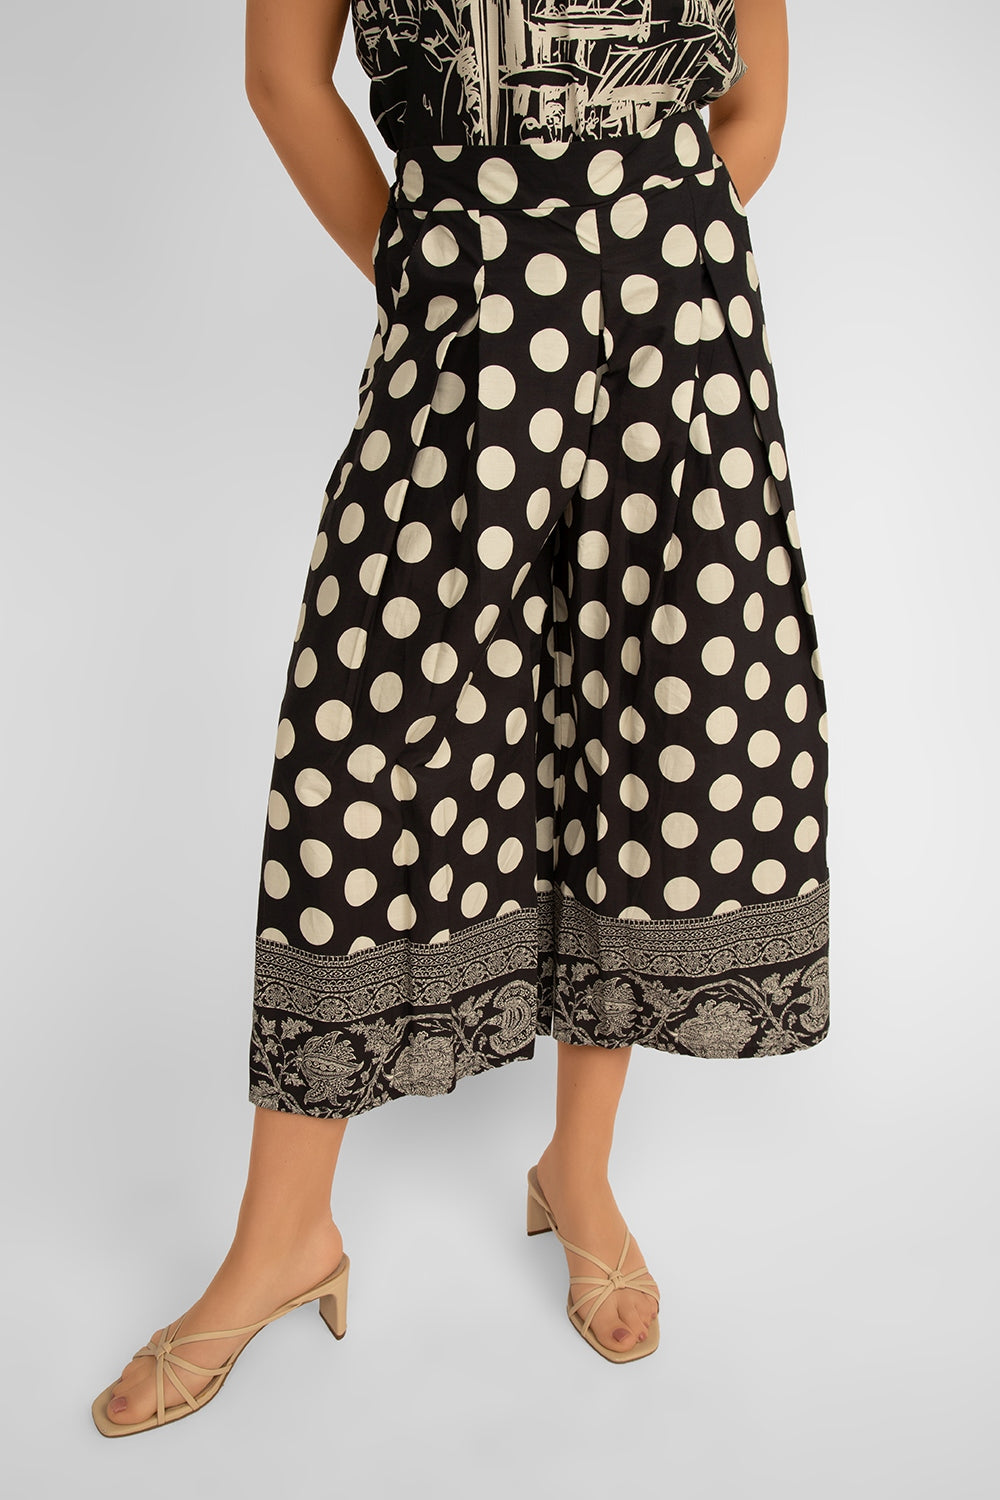 Julietta (10-H2117-C12-DOT) Women's Wide Leg Cropped Polka Dot Pleated Culottes in Black & White Polka Dot Print